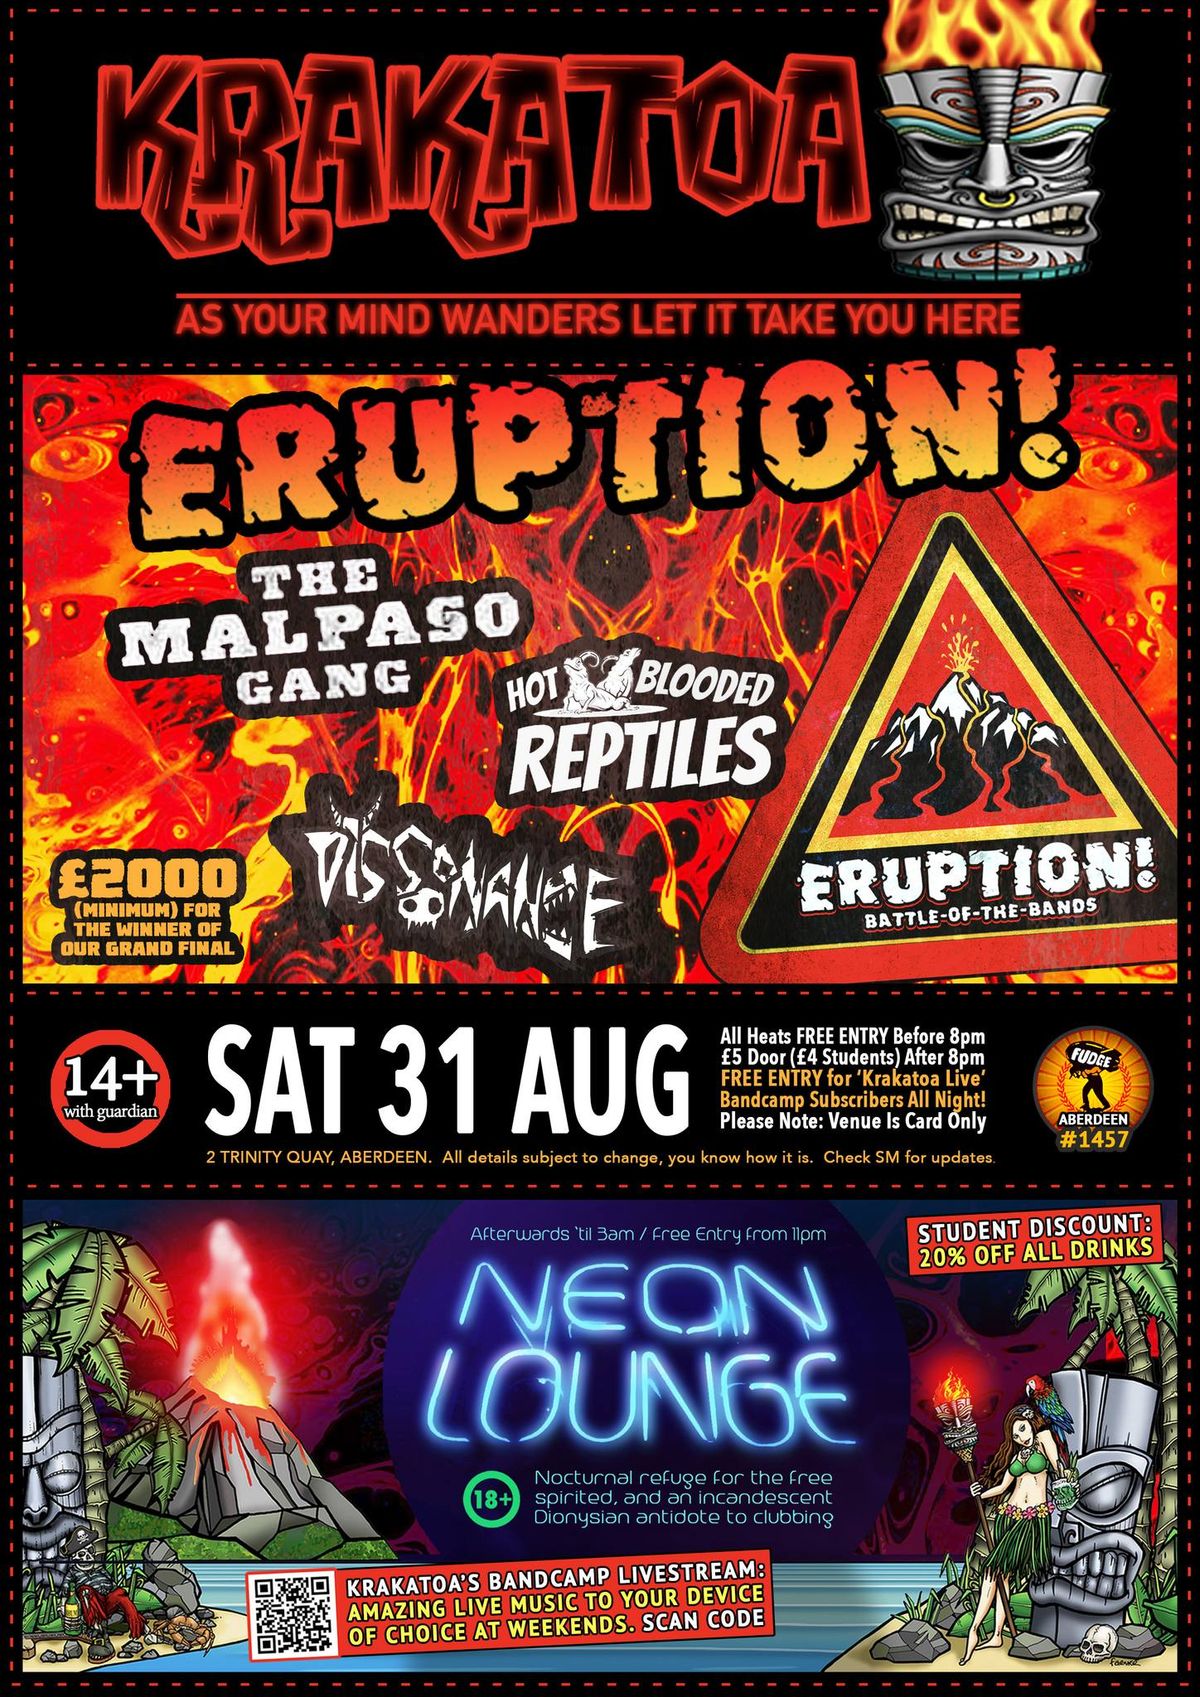 Eruption! \u00a32K BOTB - Heat - The Malpaso Gang + Hot Blooded Reptiles + Dissonance